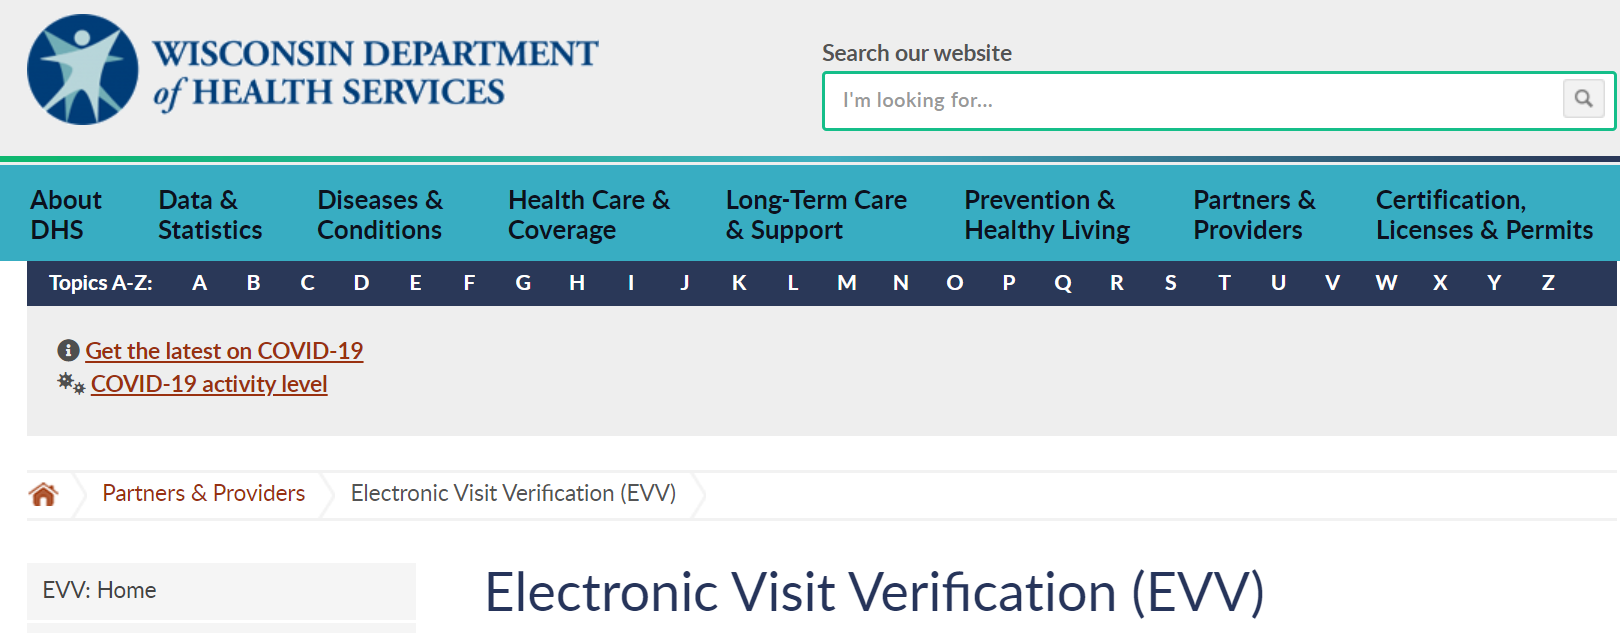 wisconsin electronic visit verification